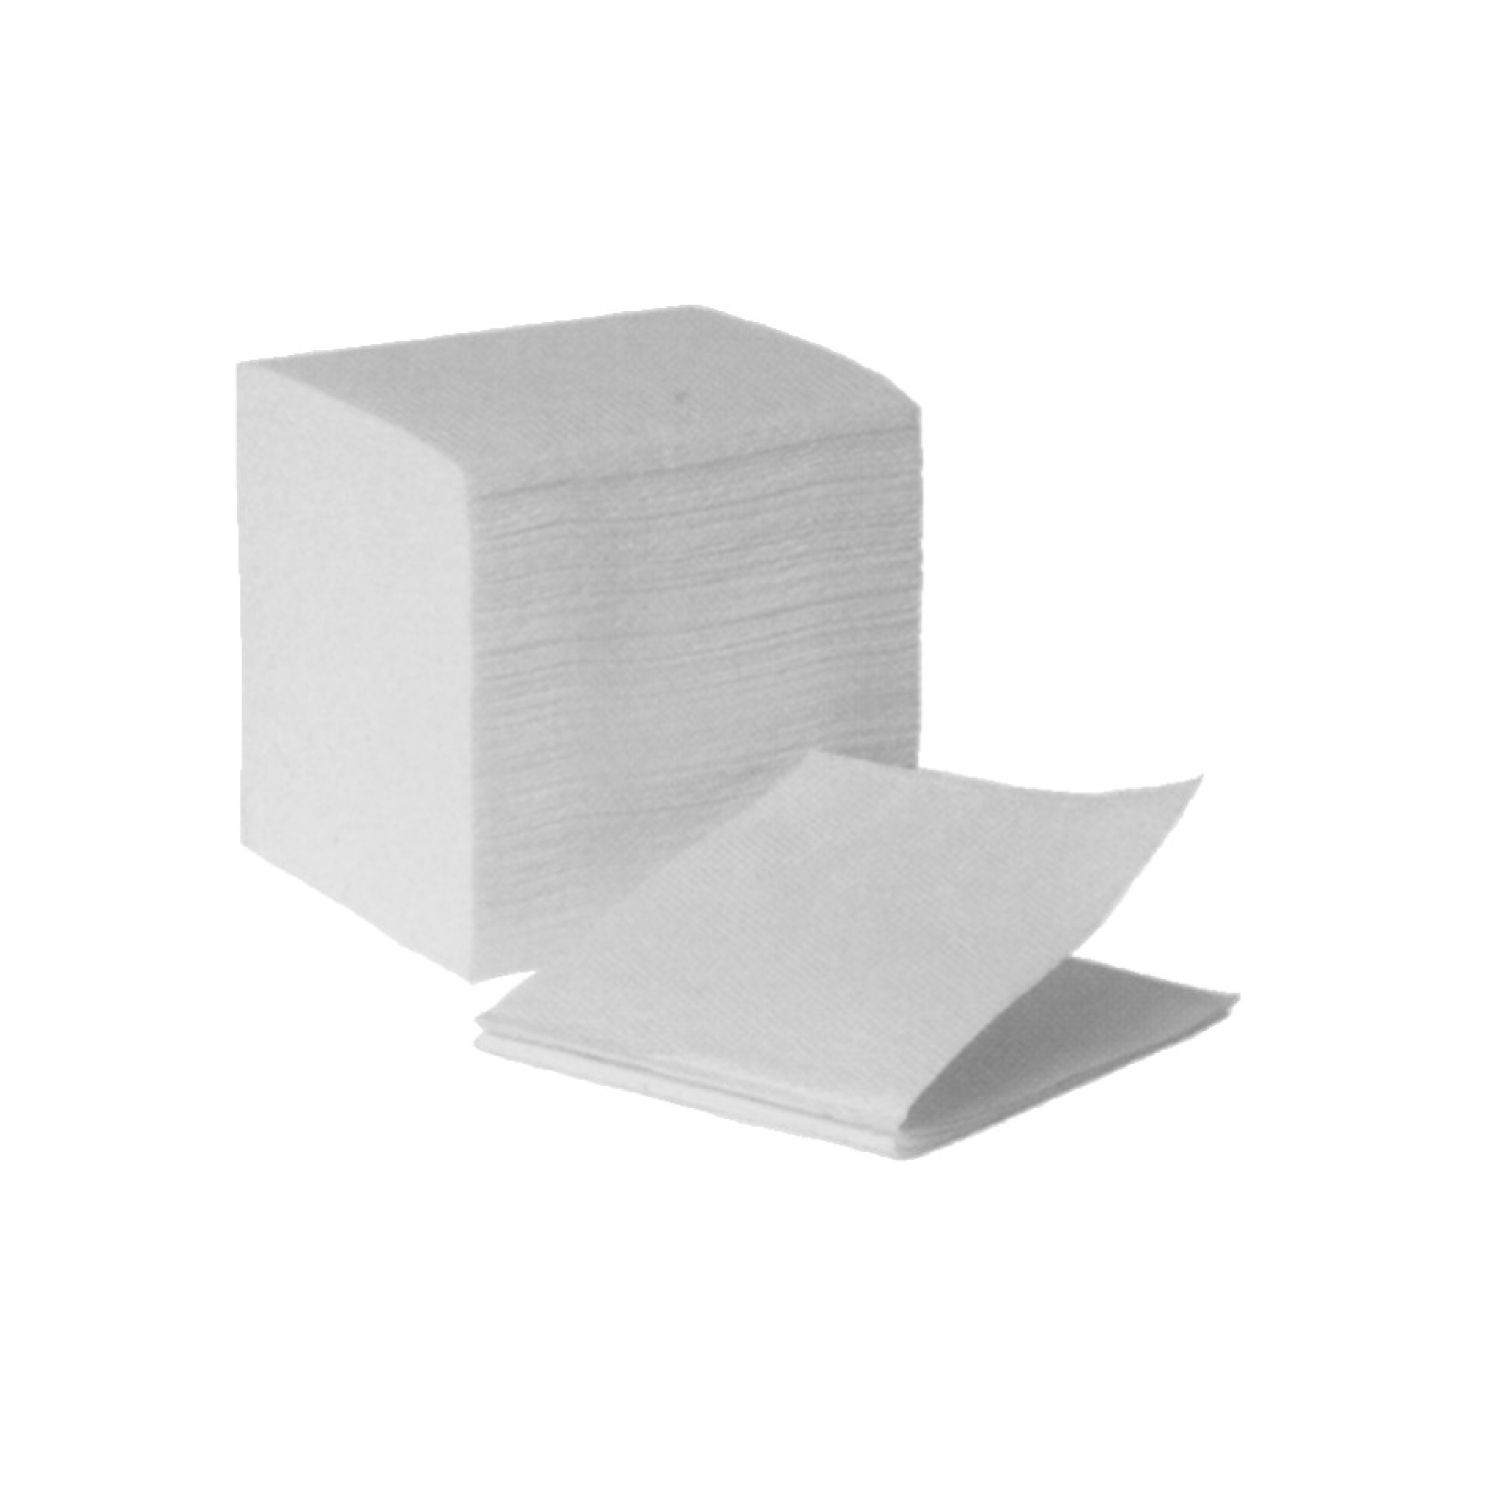 10000x Falt-Toilettenpapier (Tissue) 2-lagig weiß 22 x 11 cm